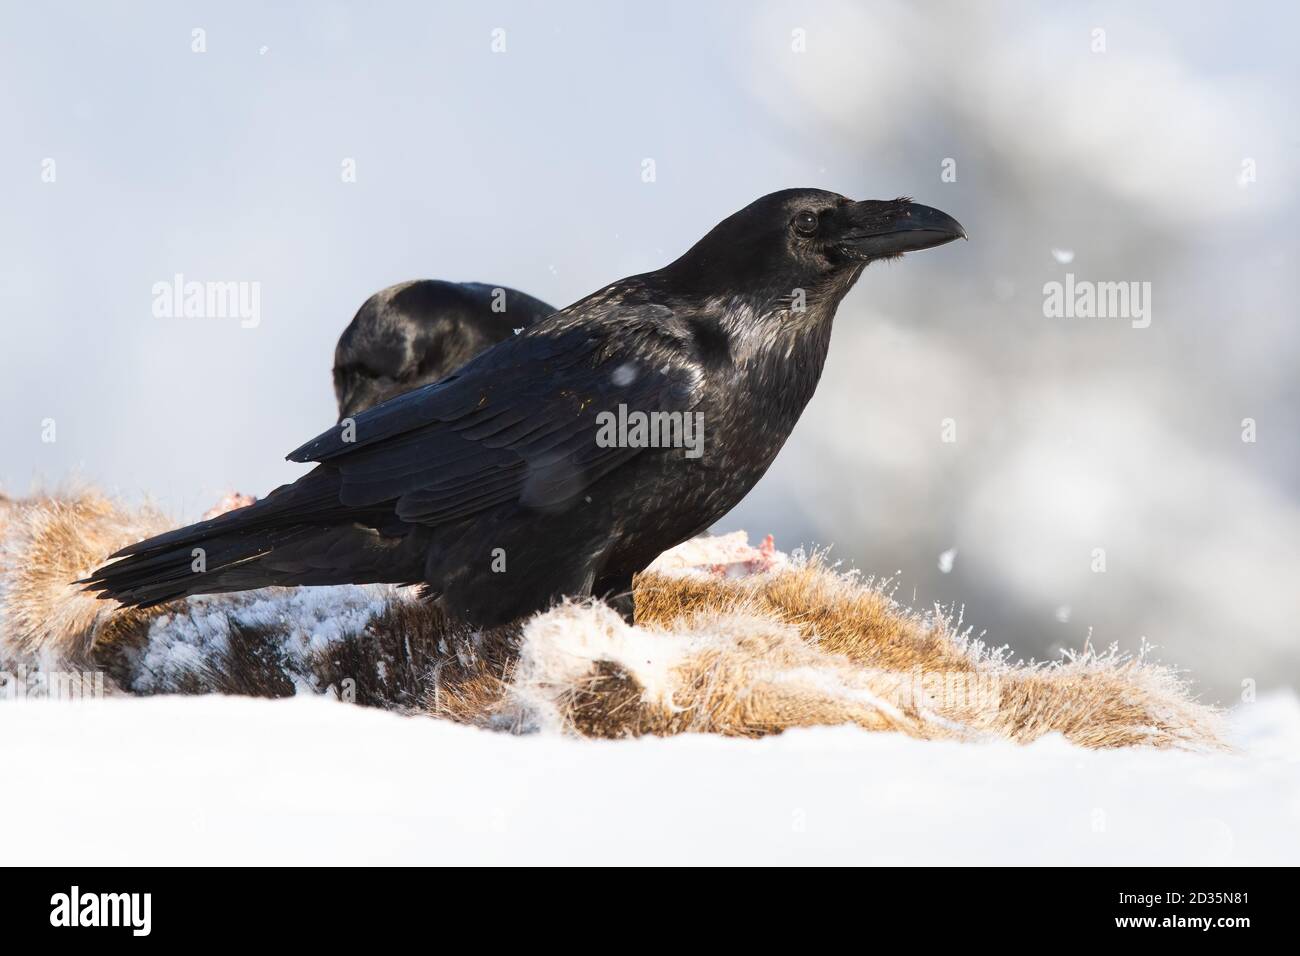 Common raven standing on prey in snow in wintertime. Stock Photo